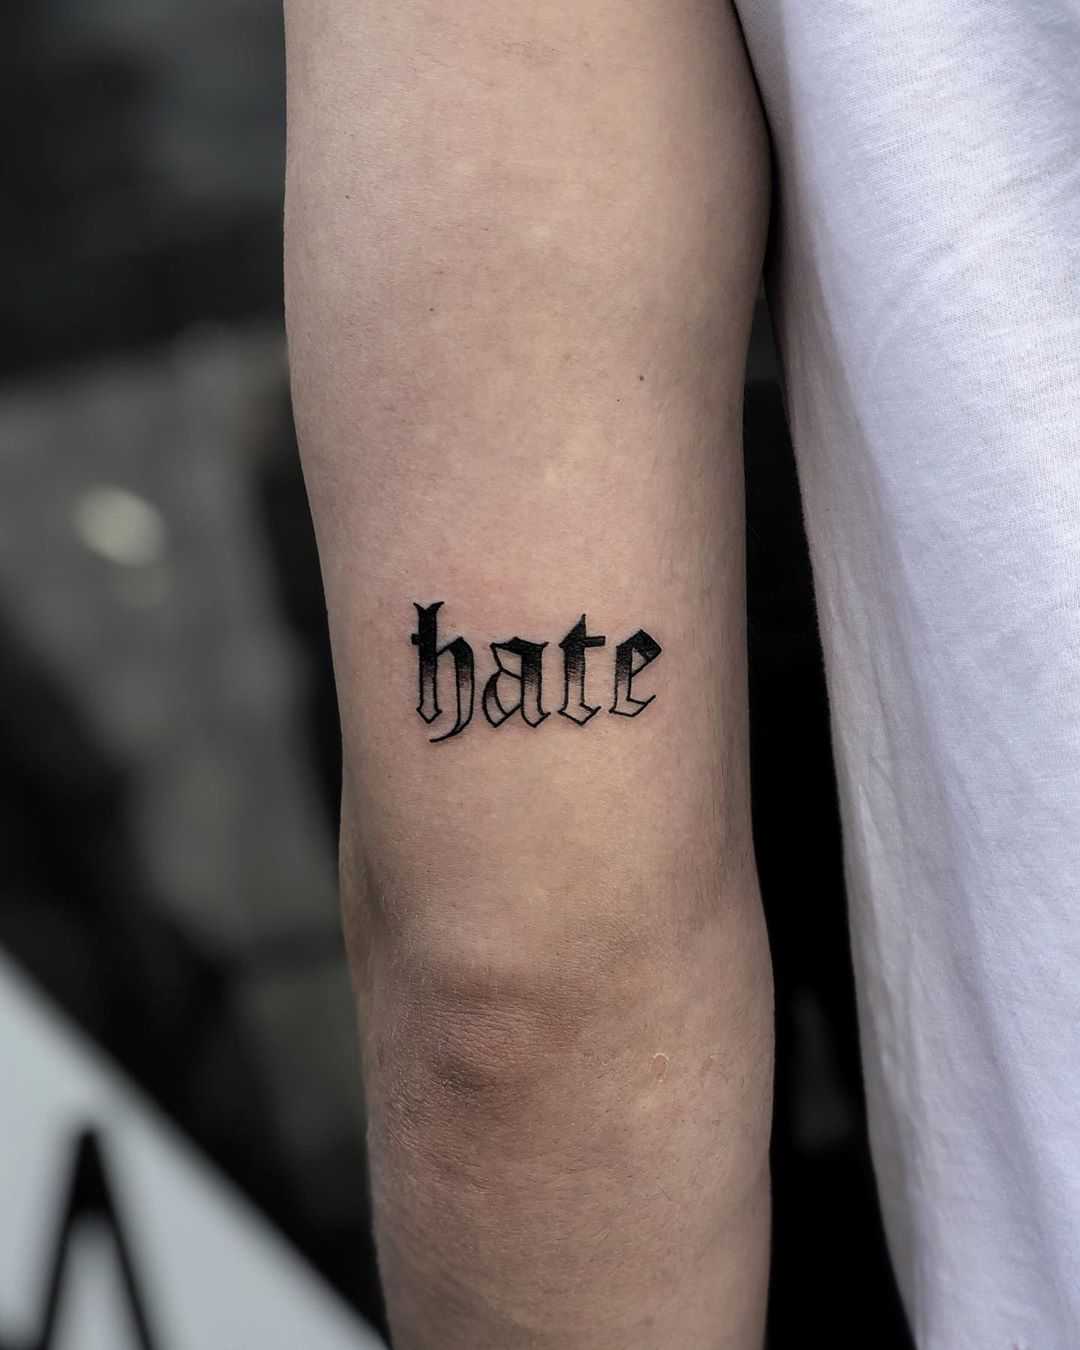 Hate tattoo by Loz McLean